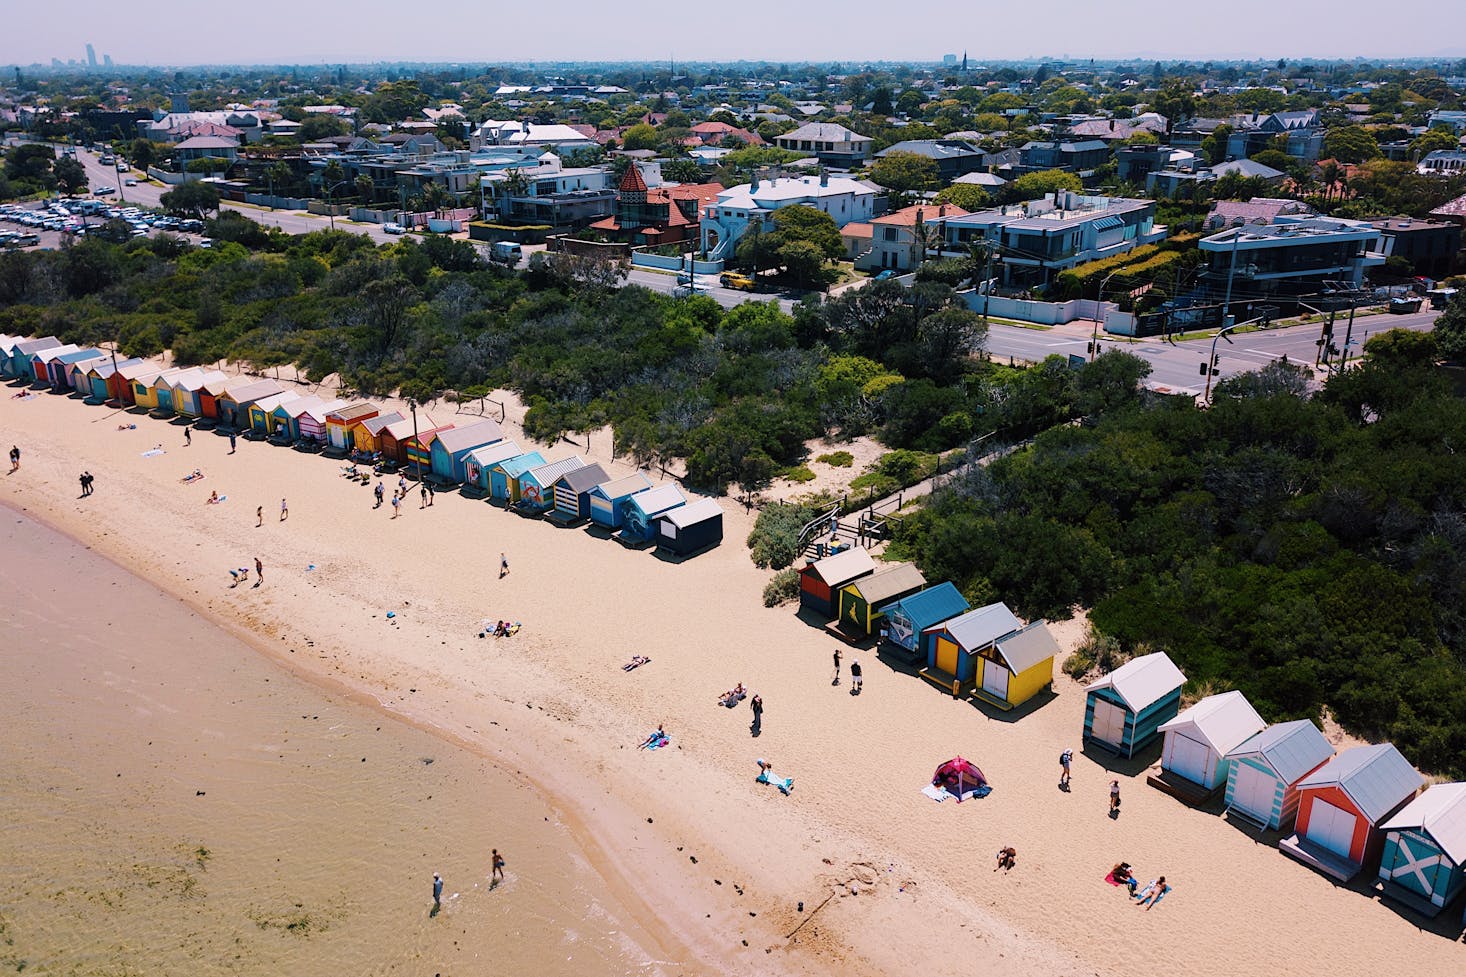 Best beaches near Melbourne